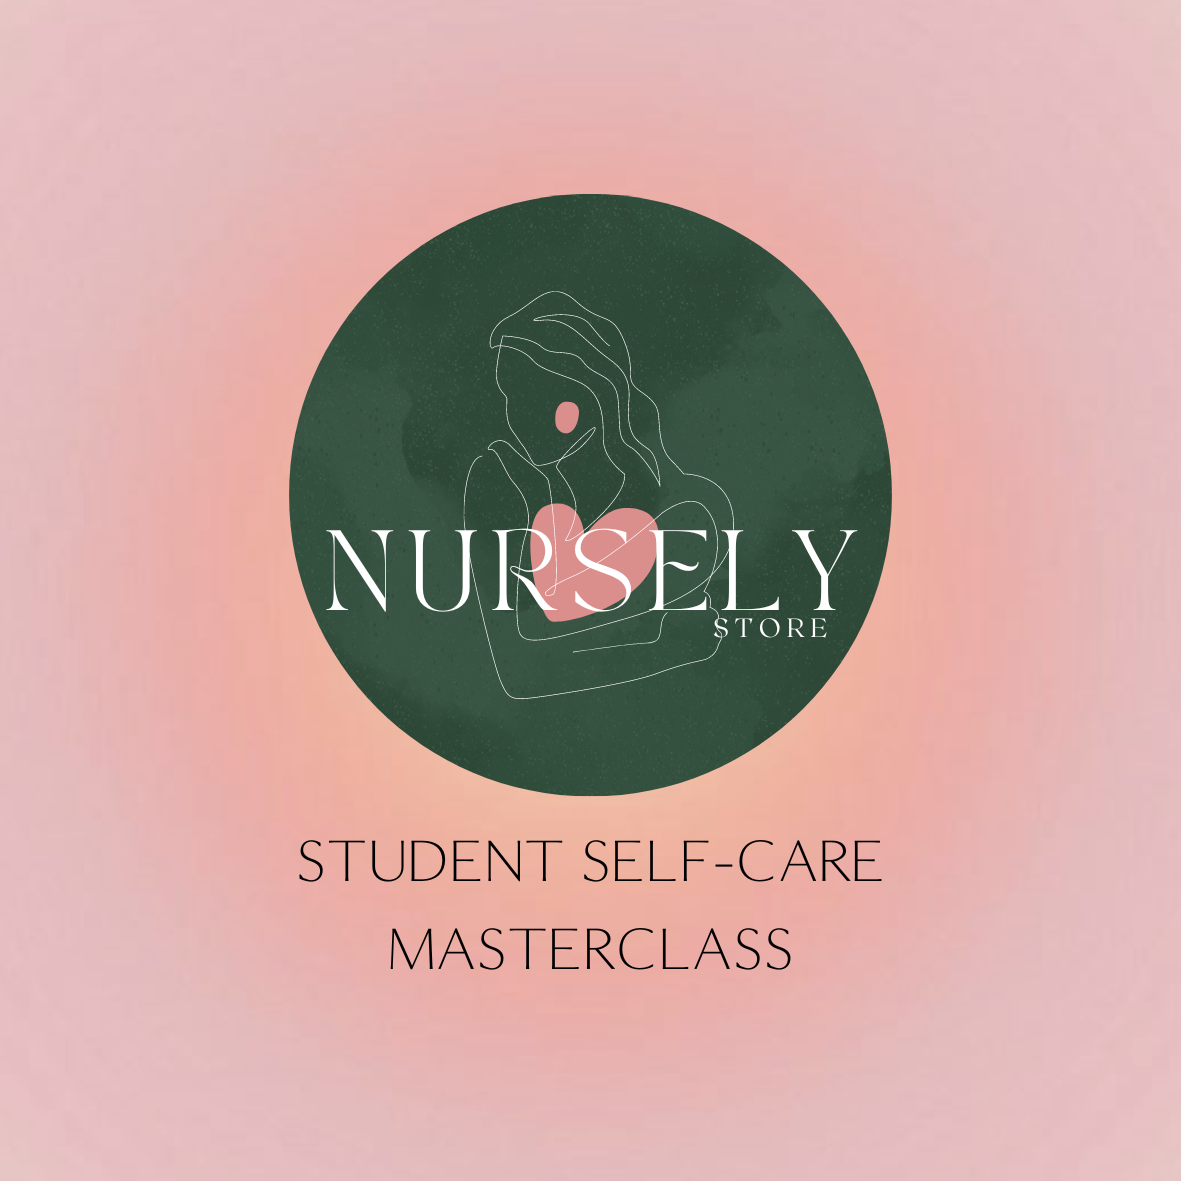 Student self-care masterclass